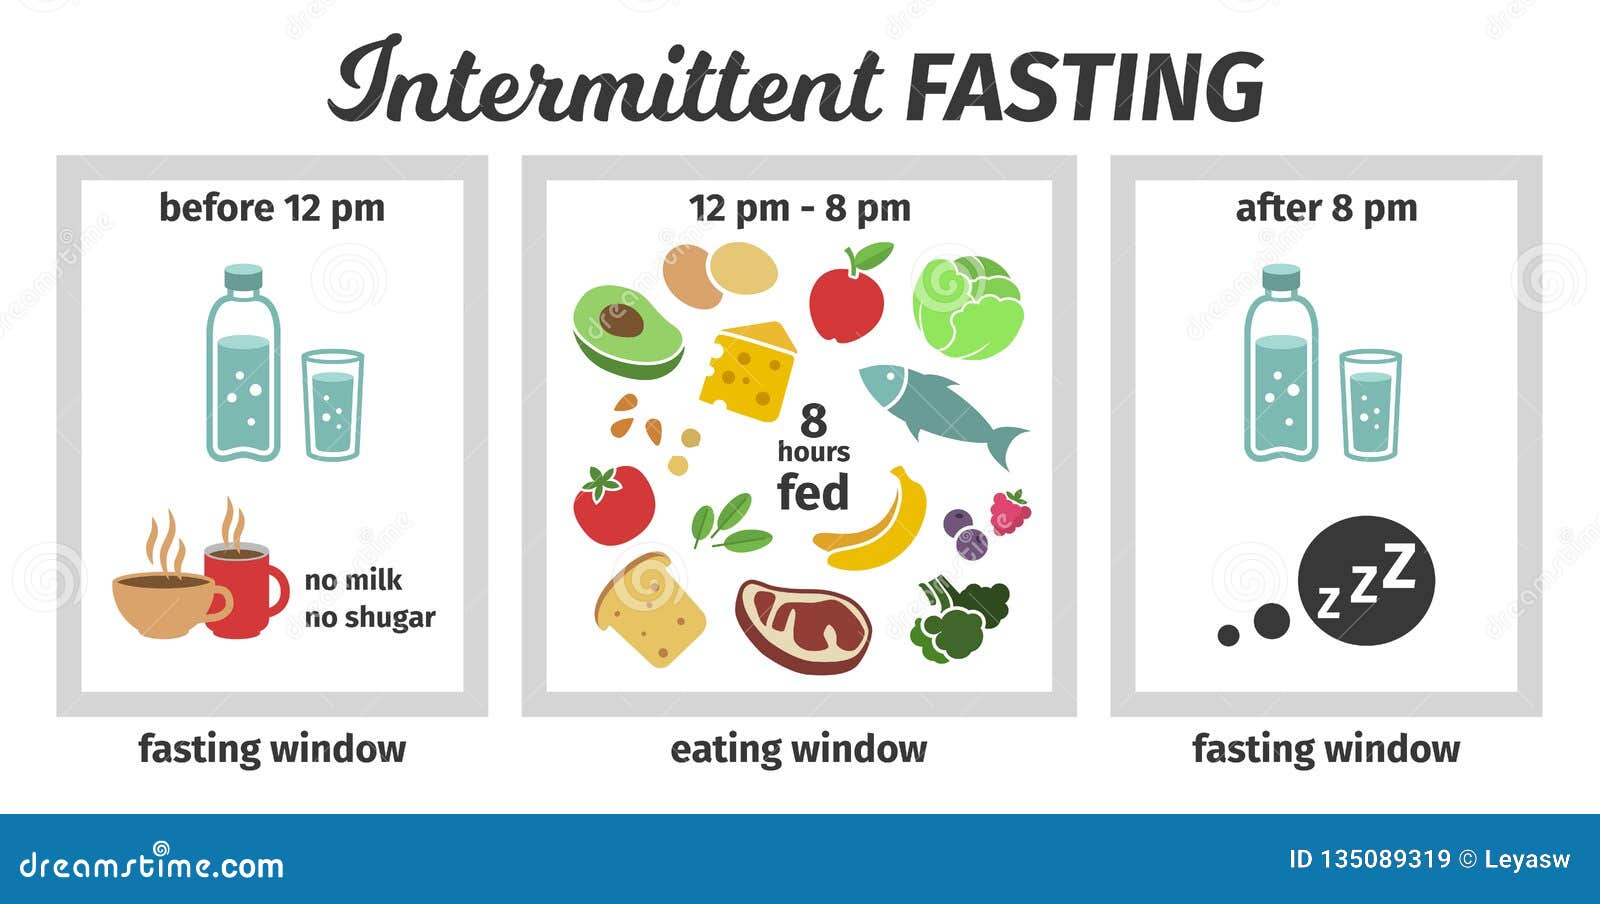 dieta intermittent fasting)